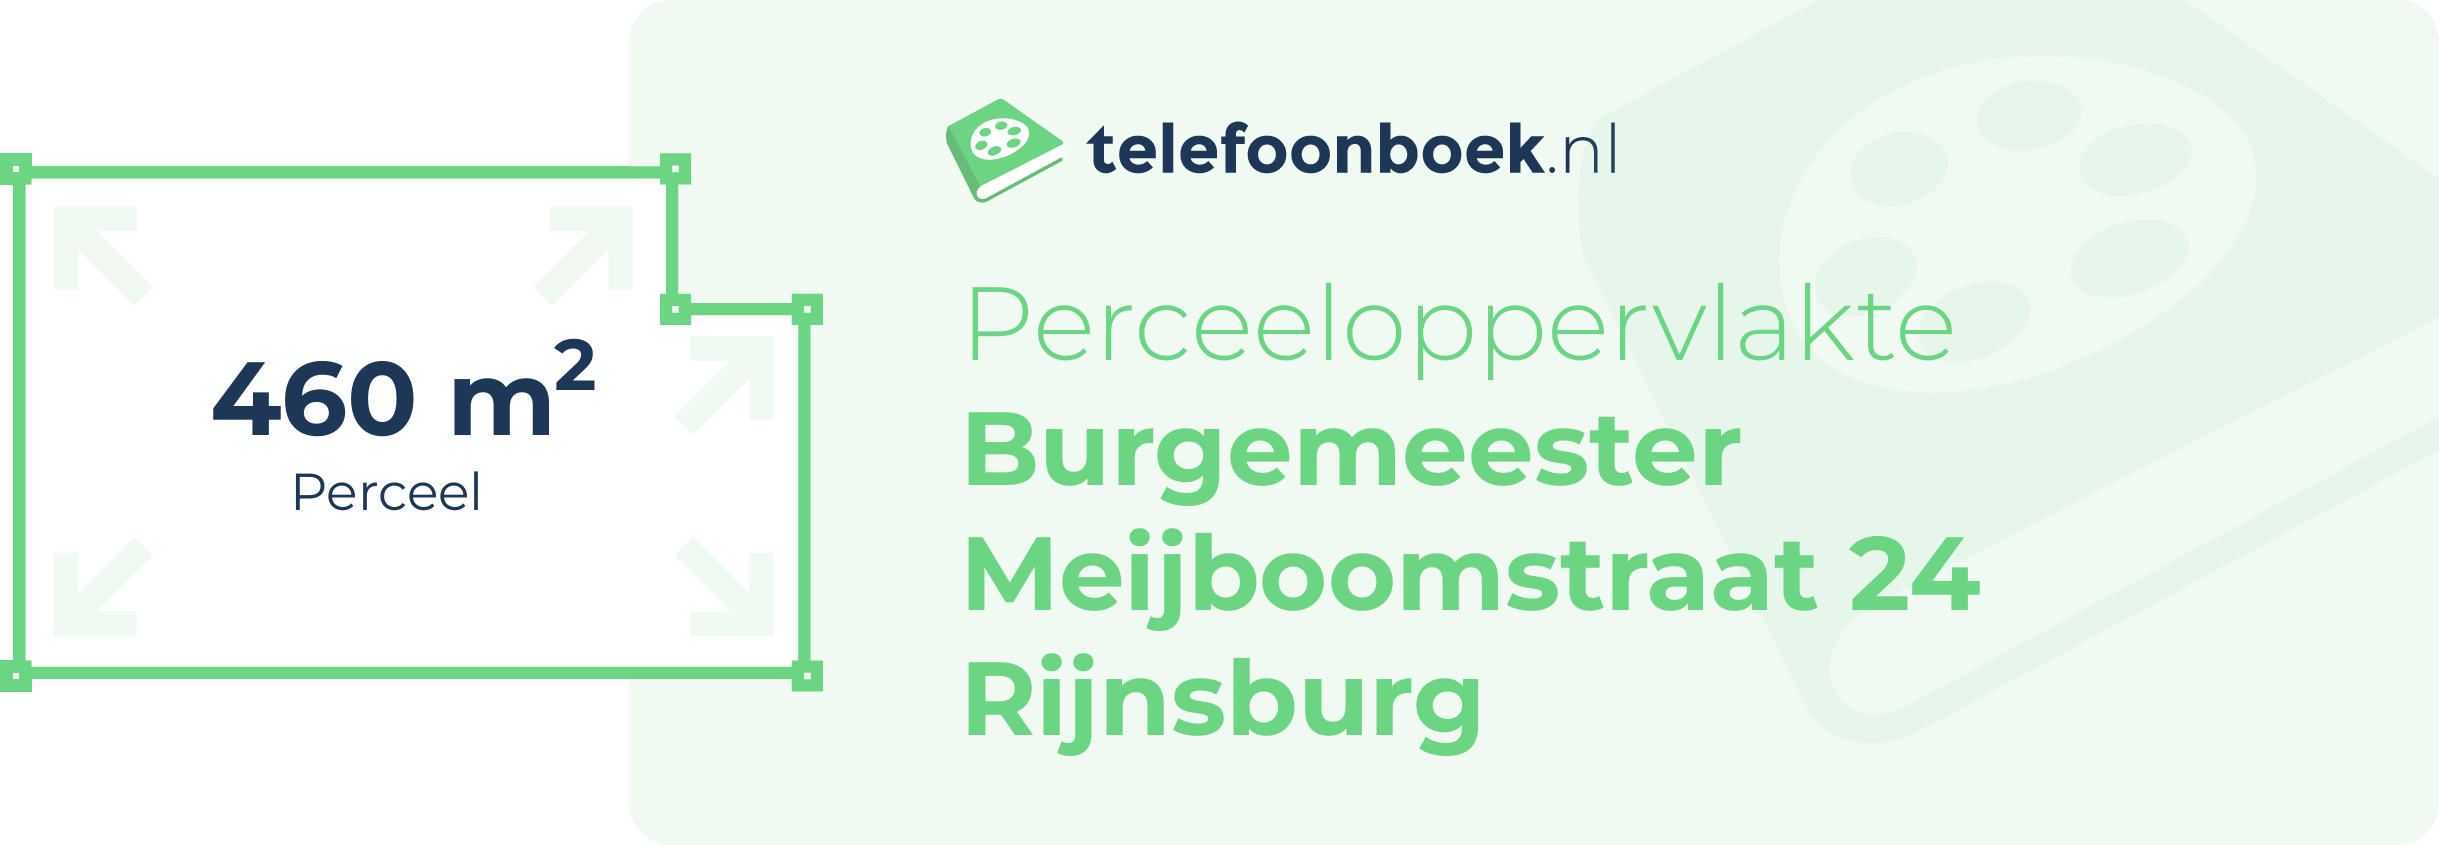 Perceeloppervlakte Burgemeester Meijboomstraat 24 Rijnsburg